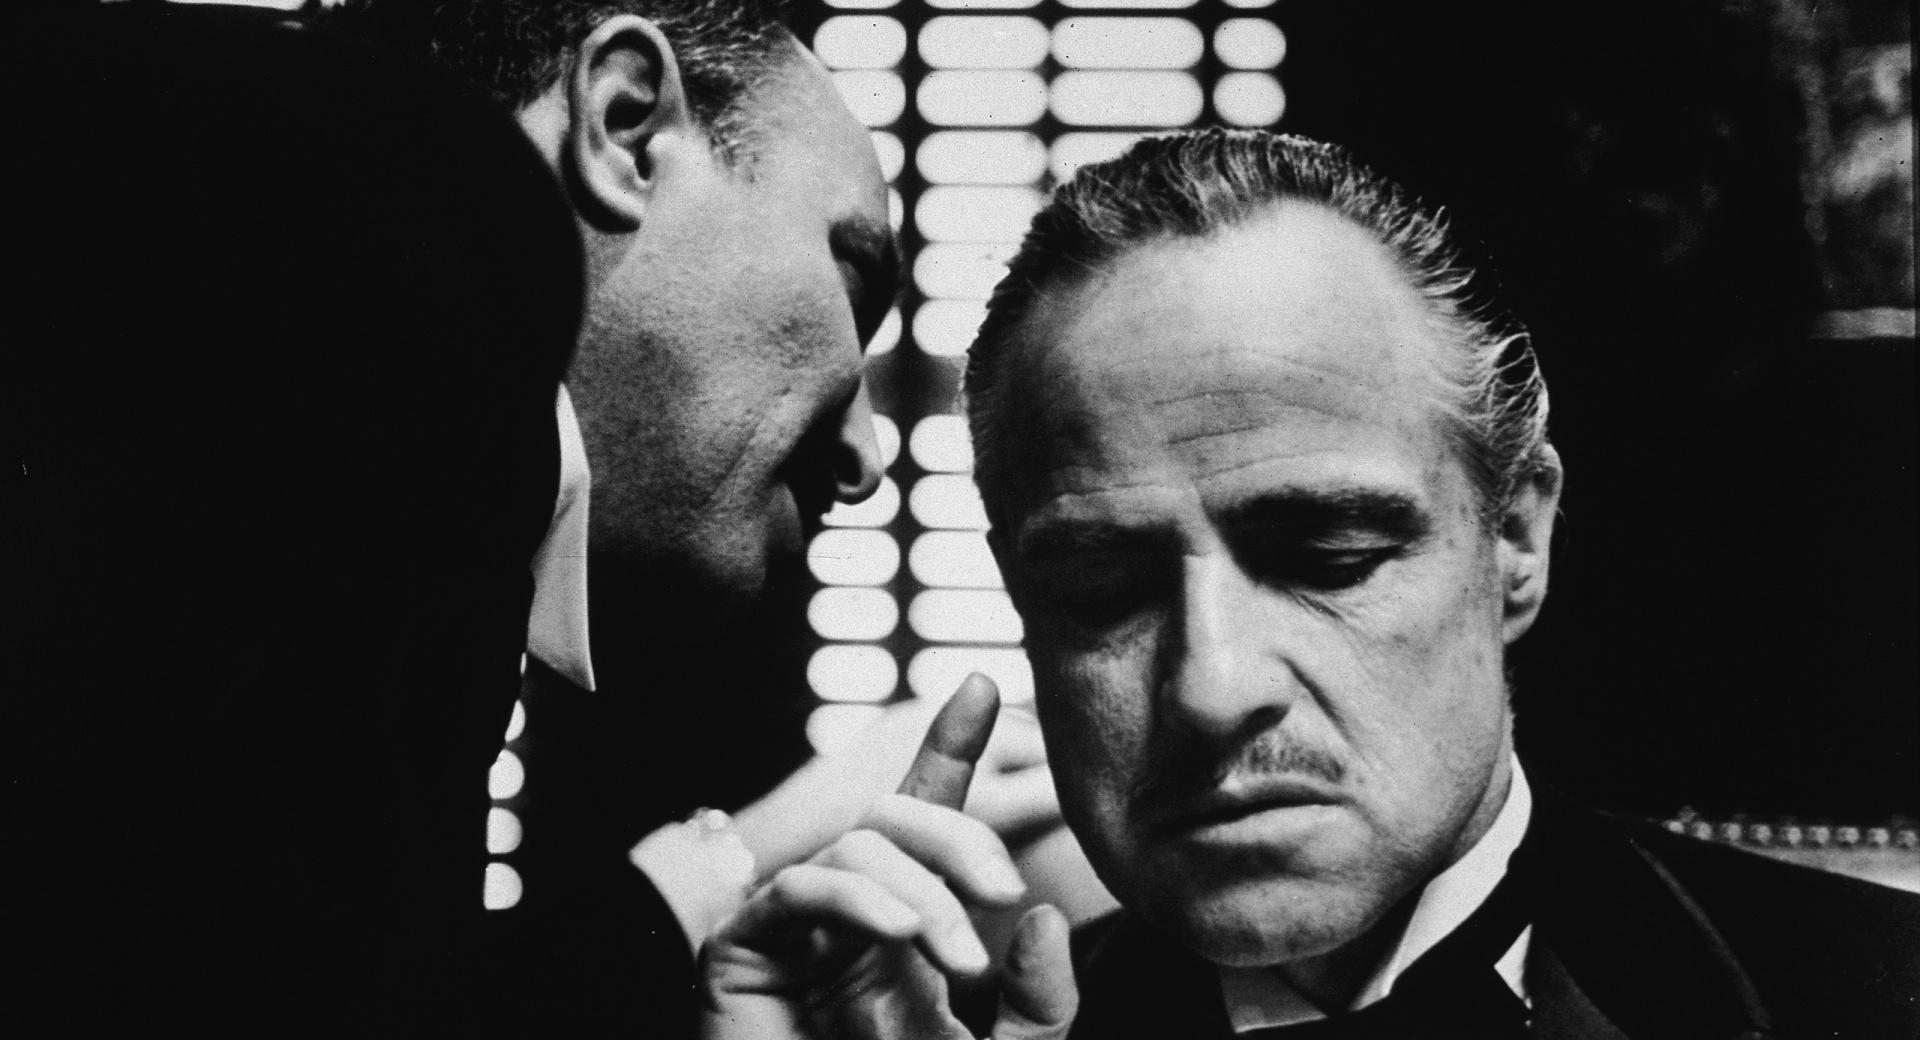 Godfather Marlon Brando at 1280 x 960 size wallpapers HD quality